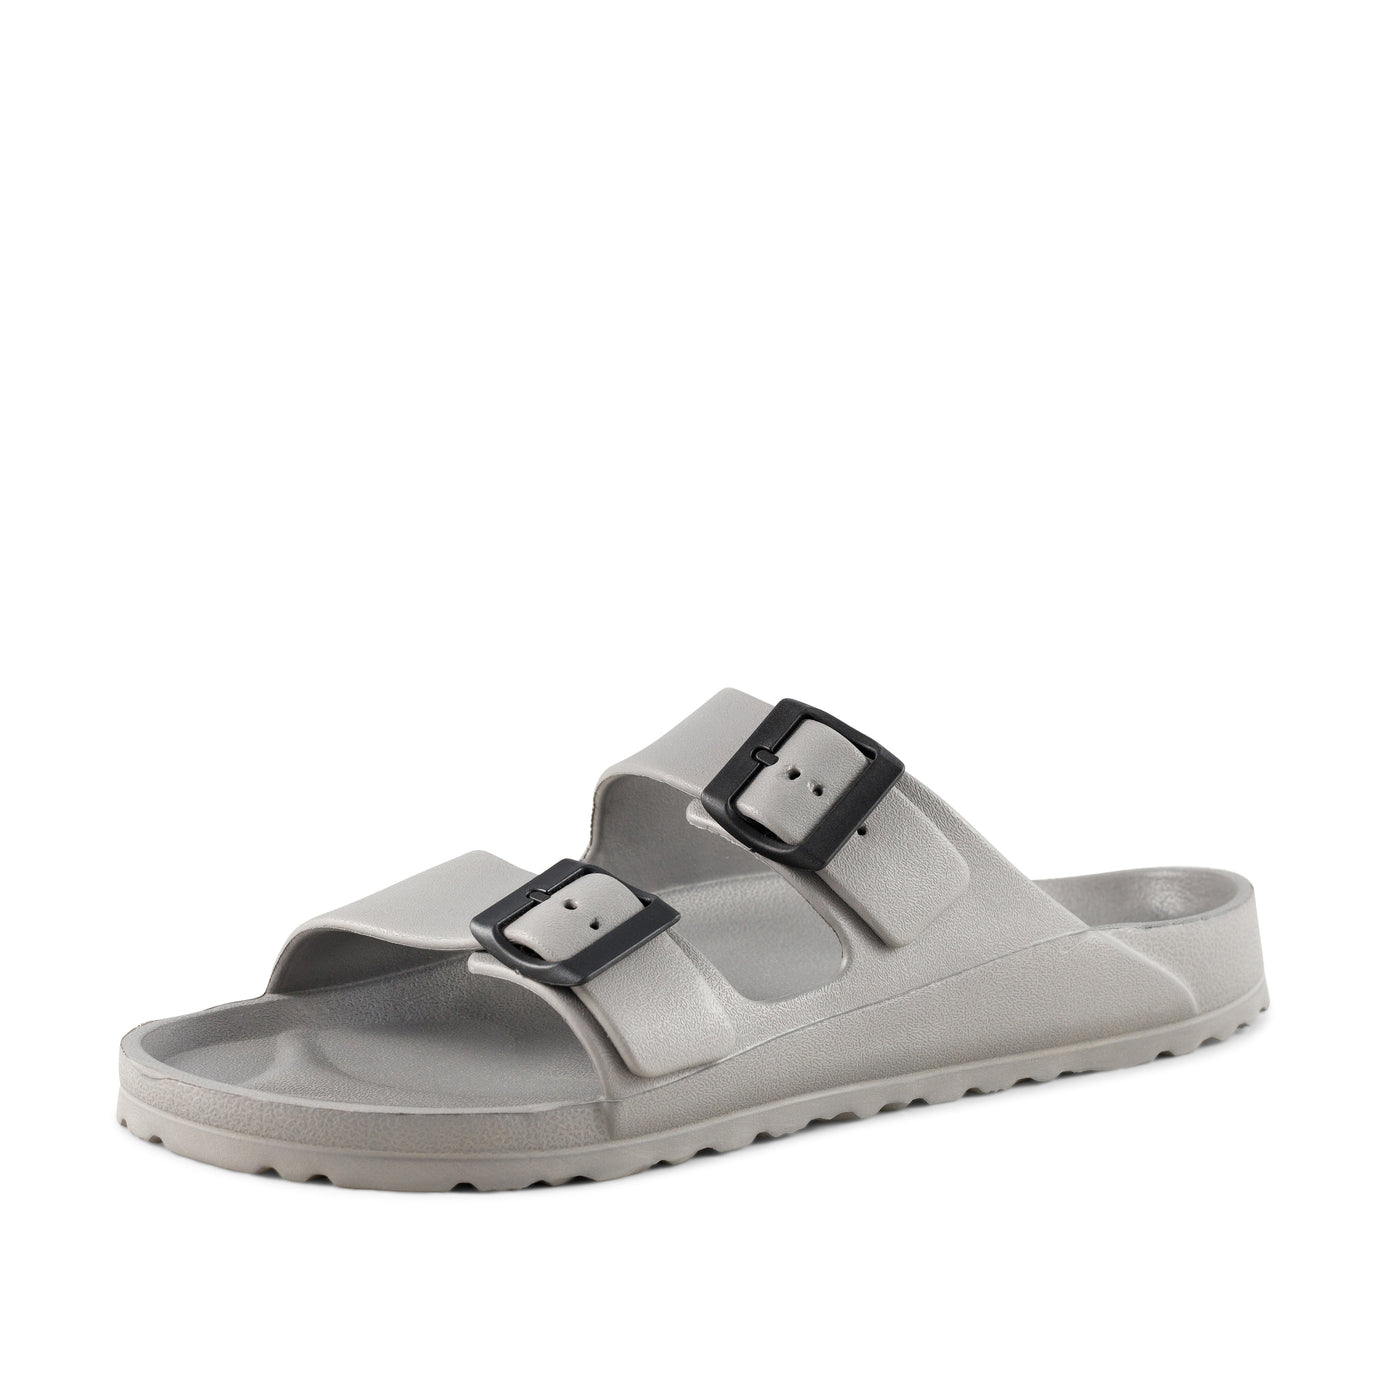 Men's Sandals Soho Grey by Nest Shoes